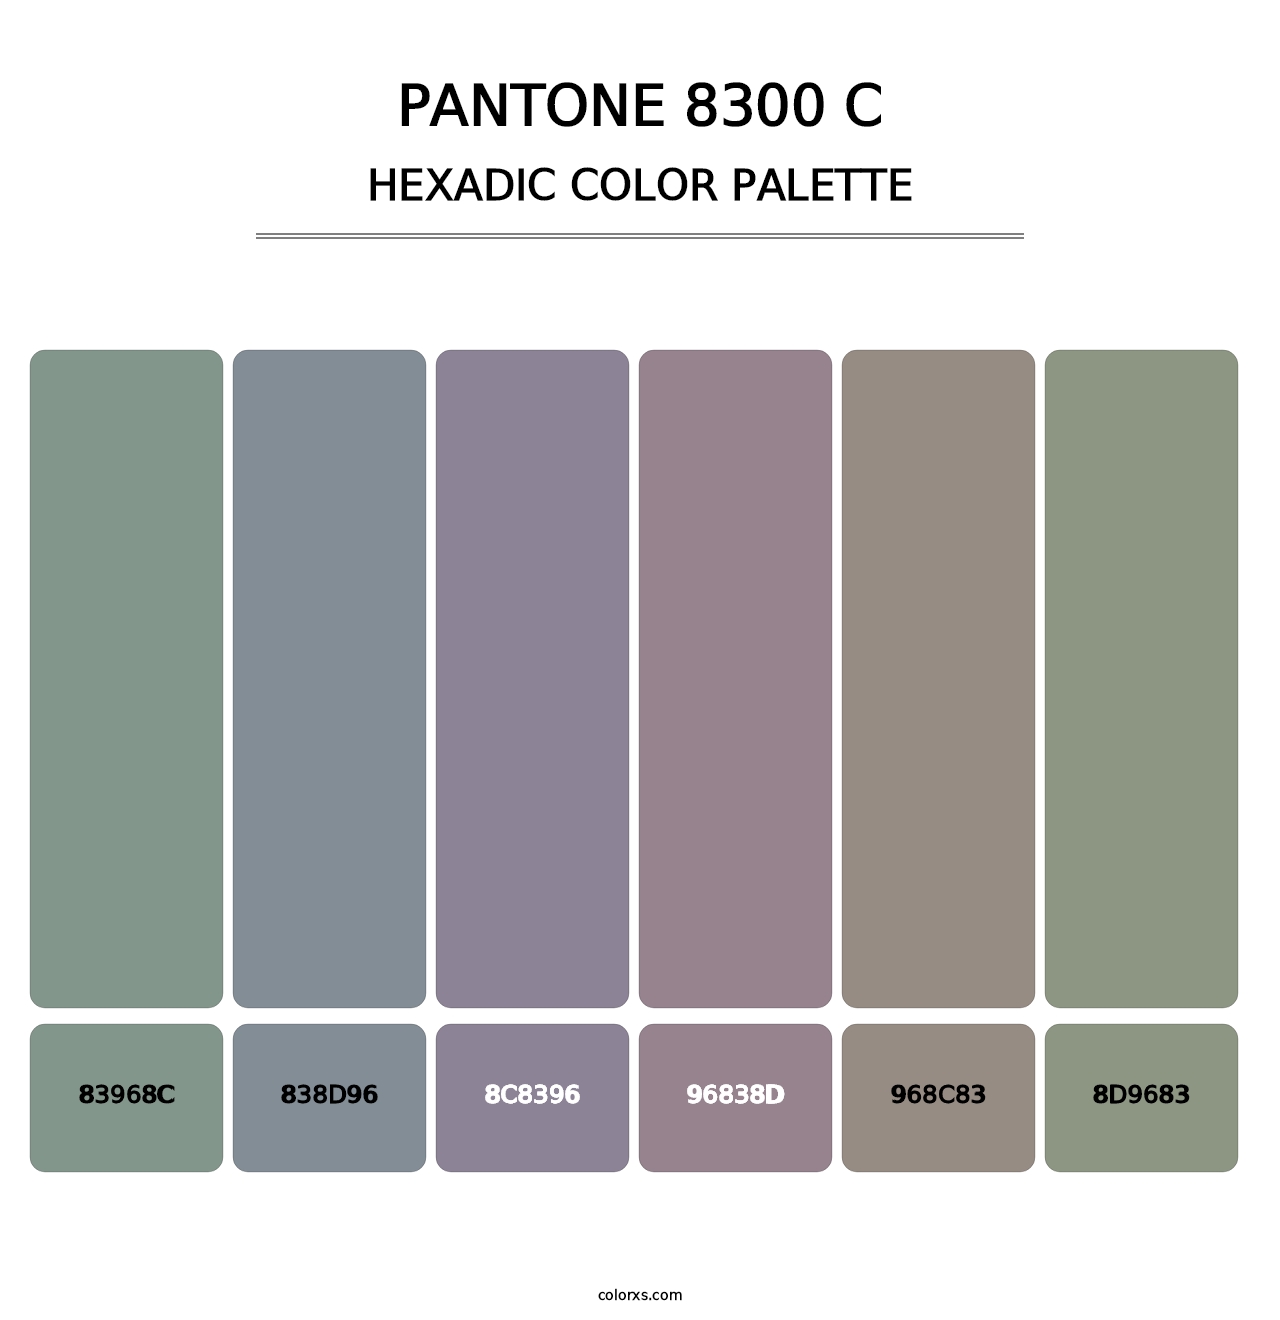 PANTONE 8300 C - Hexadic Color Palette